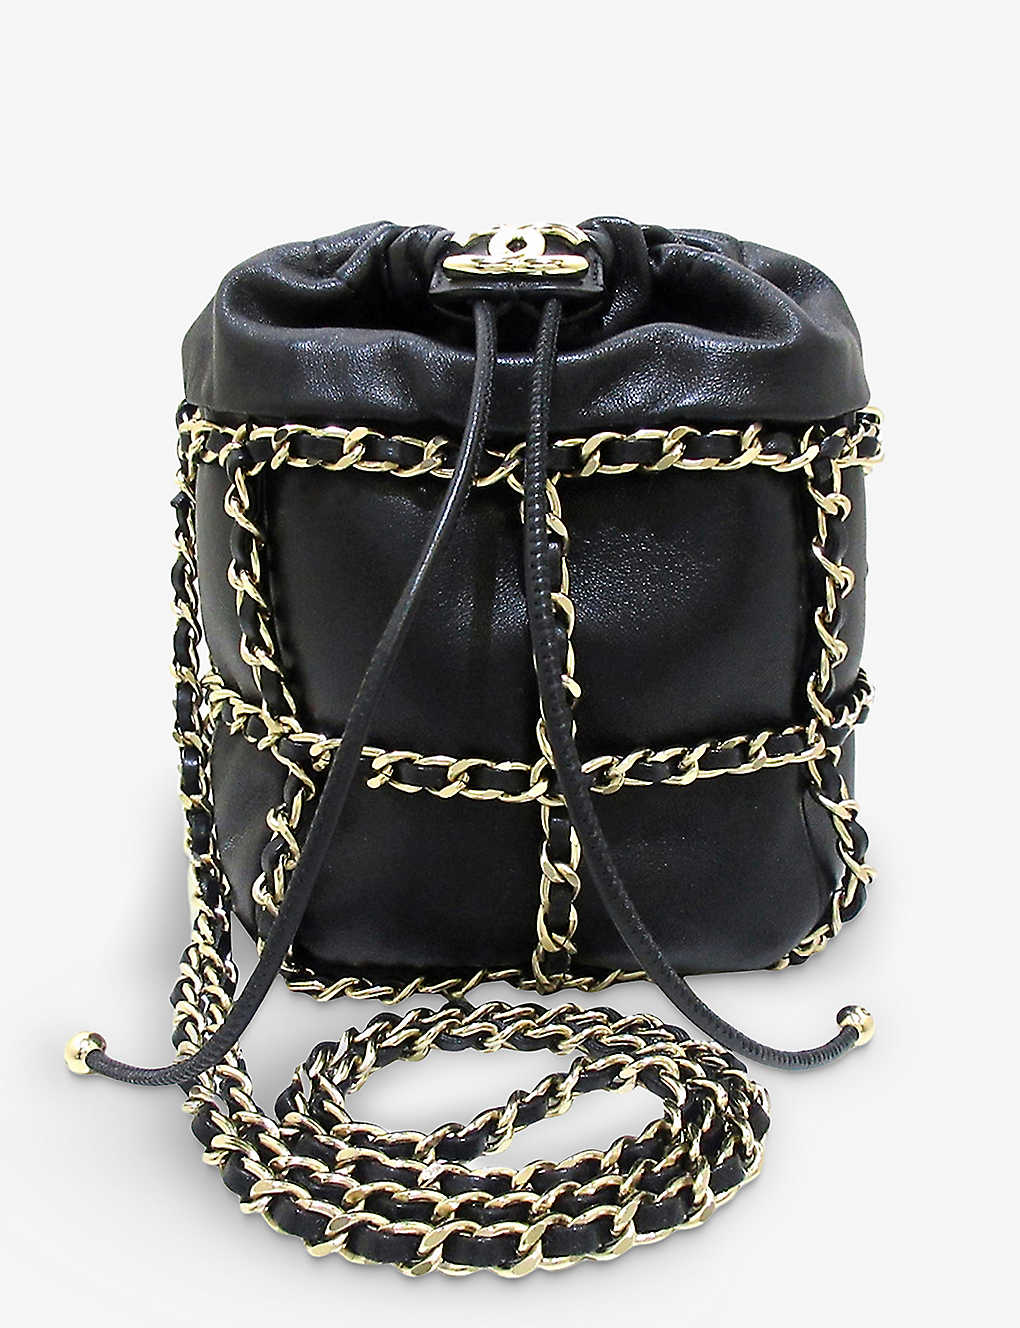 Reselfridges Black Pre-loved Chanel Chain Leather Bucket Cross-body Bag